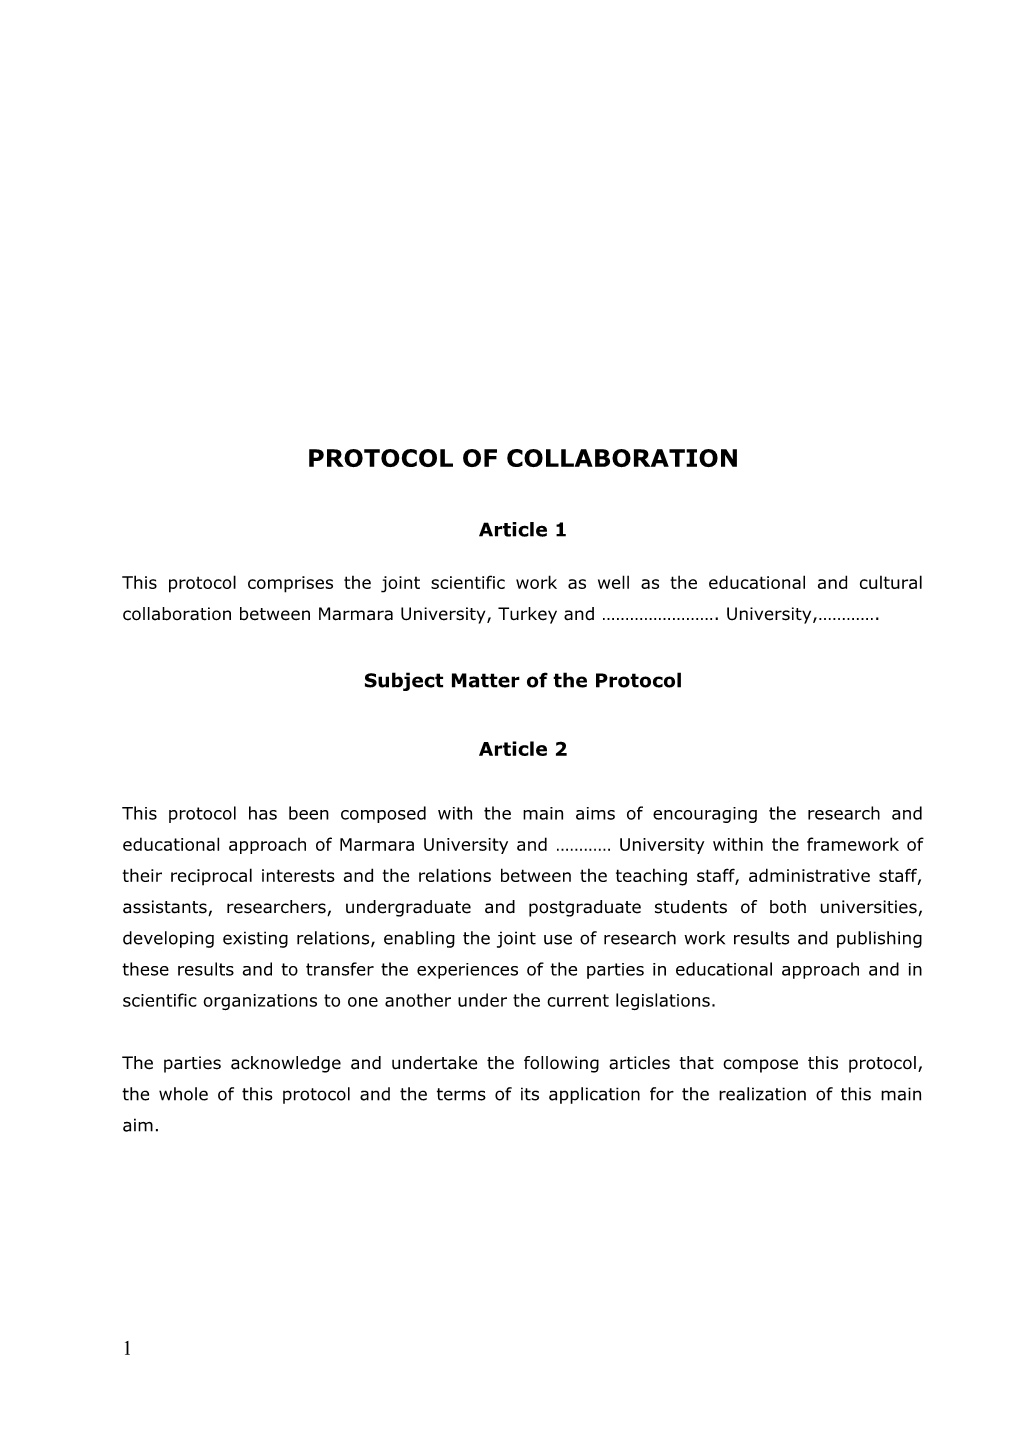 Protocol of Collaboration